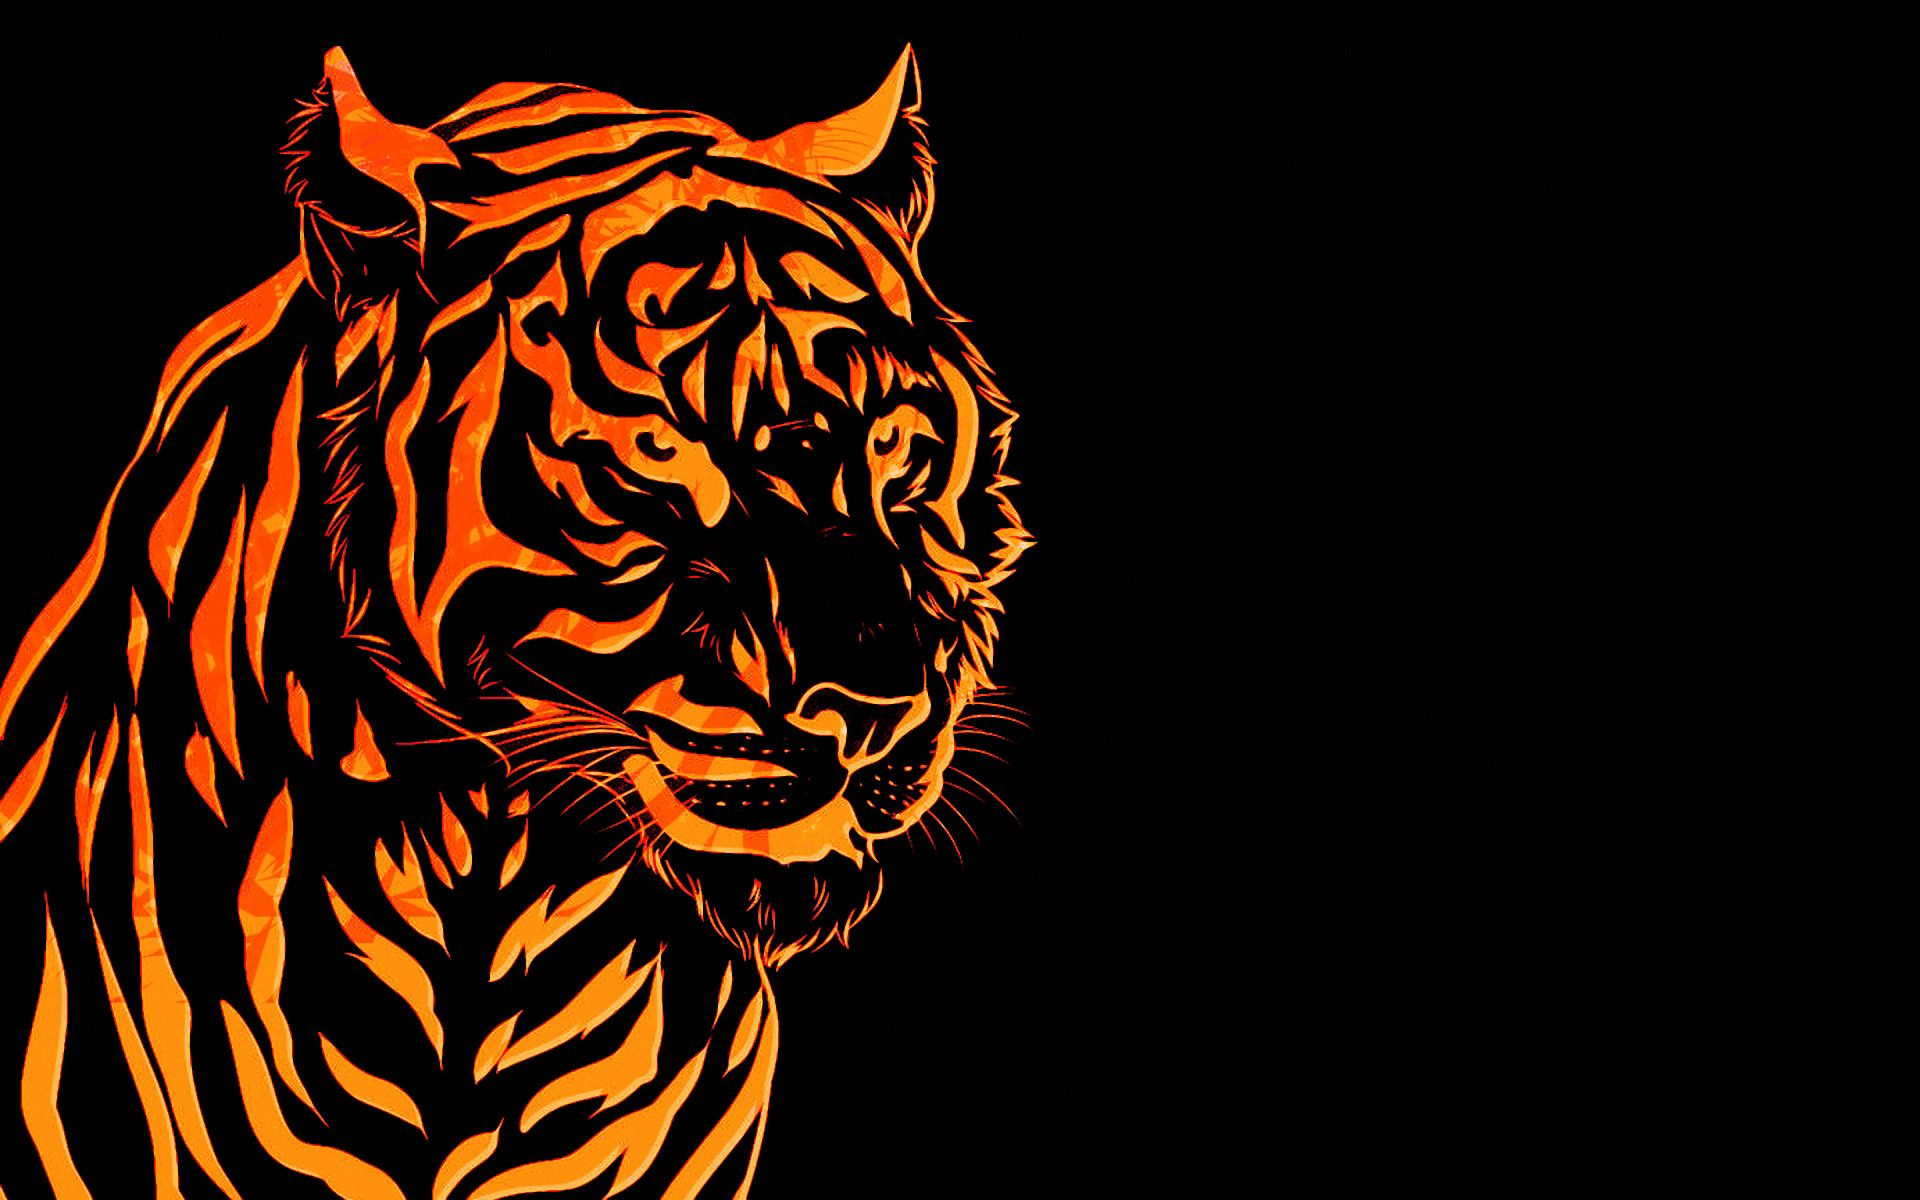 Cool Tiger Wallpaper background .pavbca.com